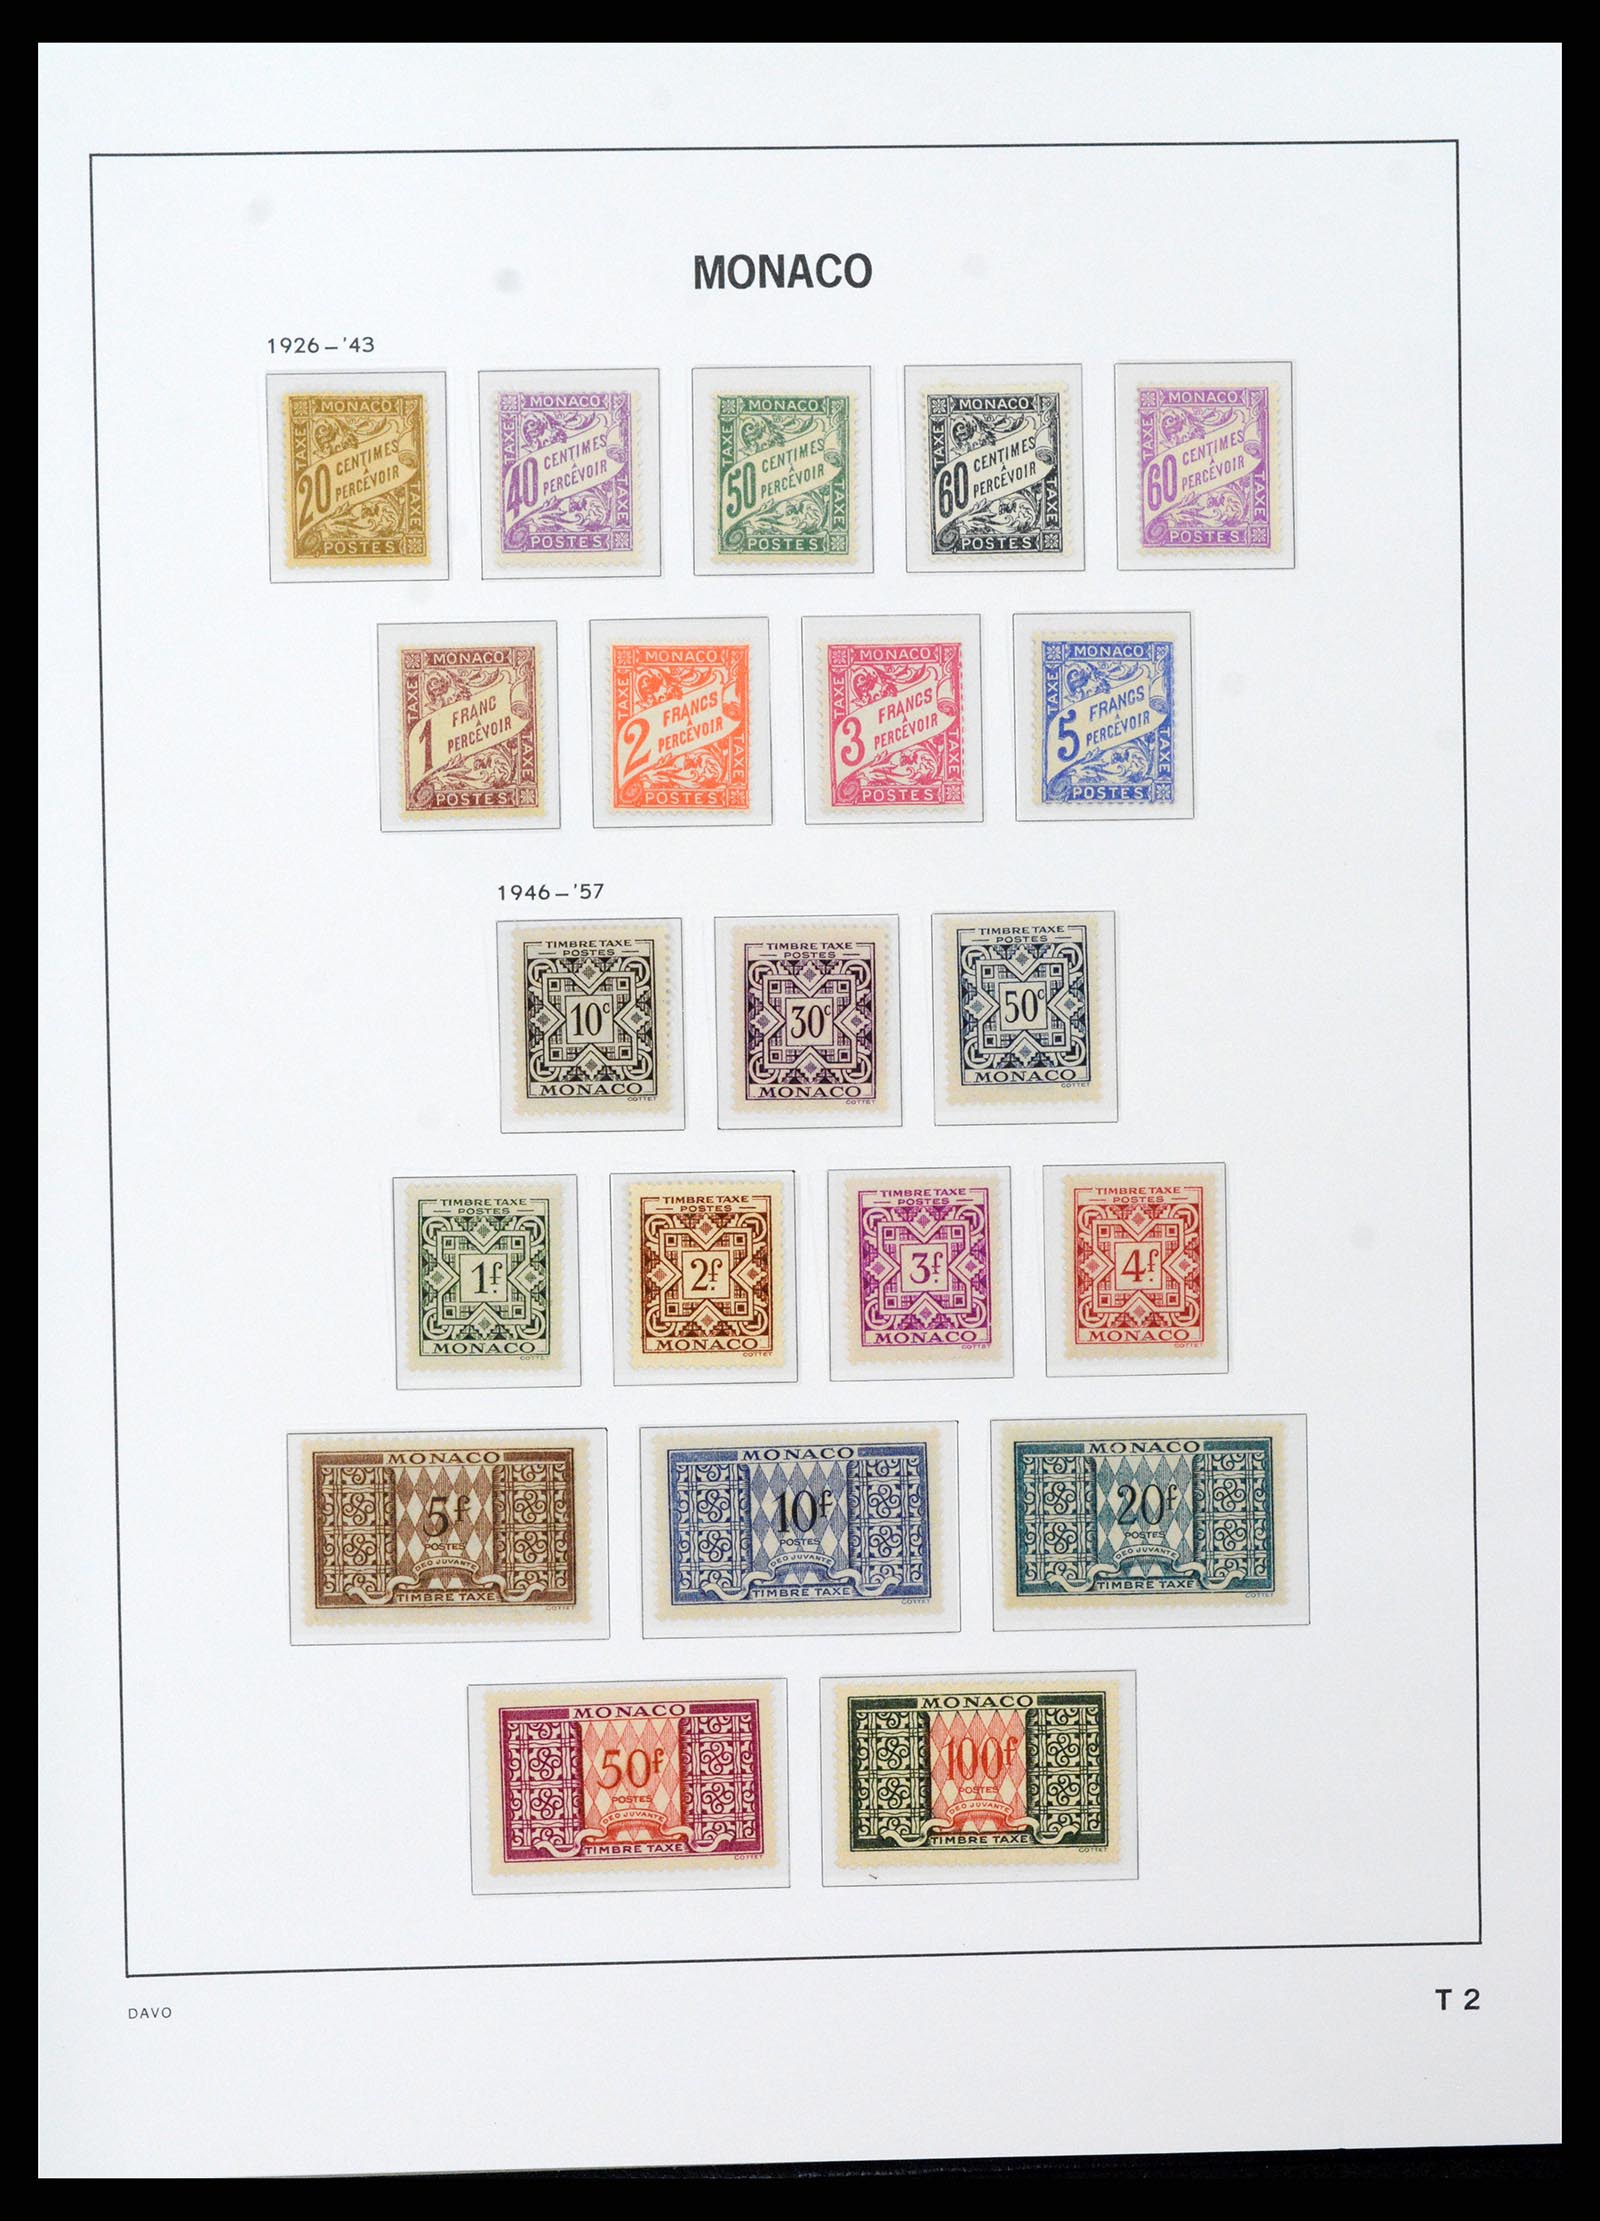 37279 074 - Stamp collection 37279 Monaco 1885-1969.